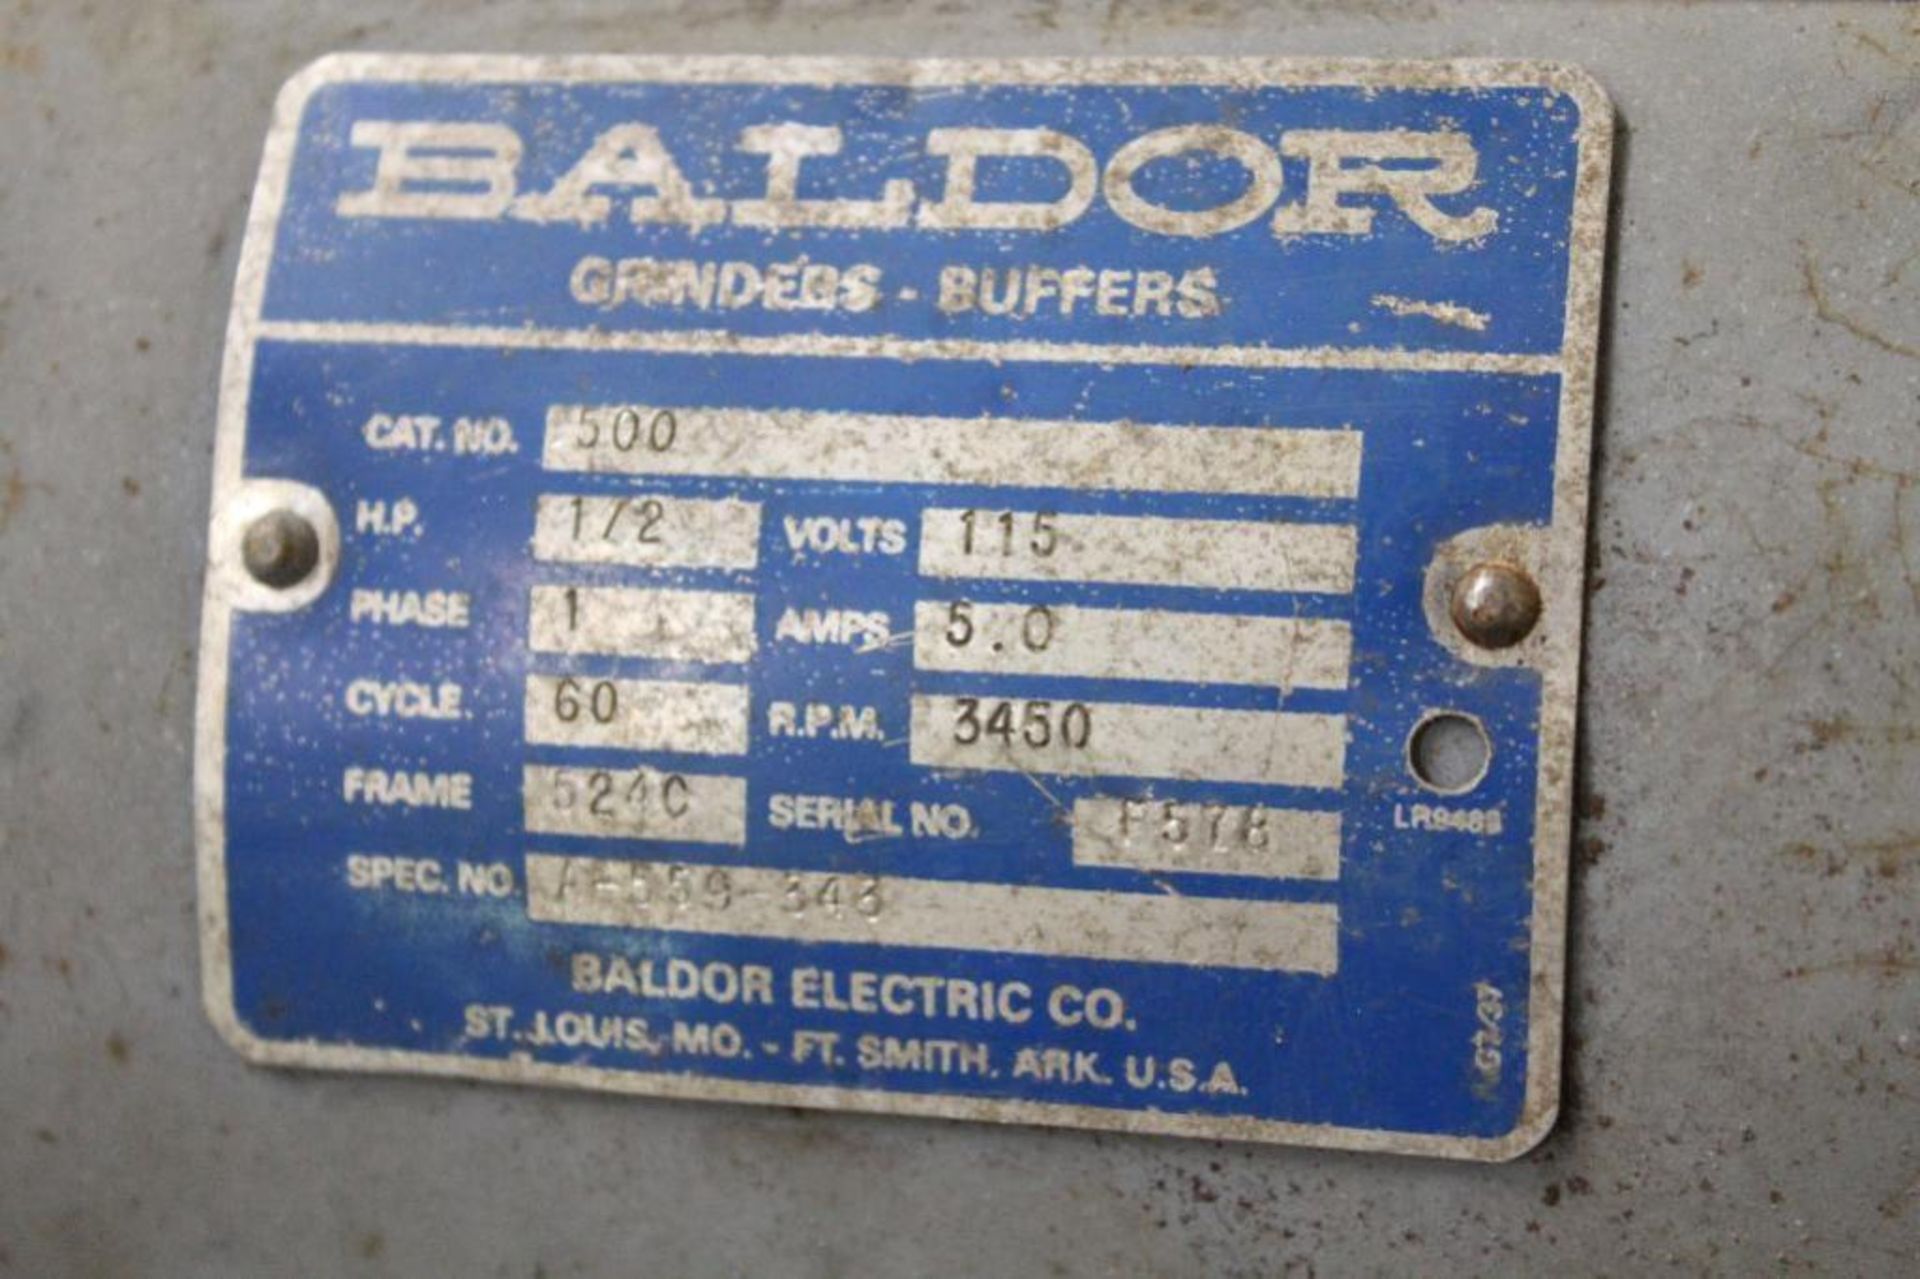 Baldor Cat No.500 Tool Grinder - Image 5 of 6